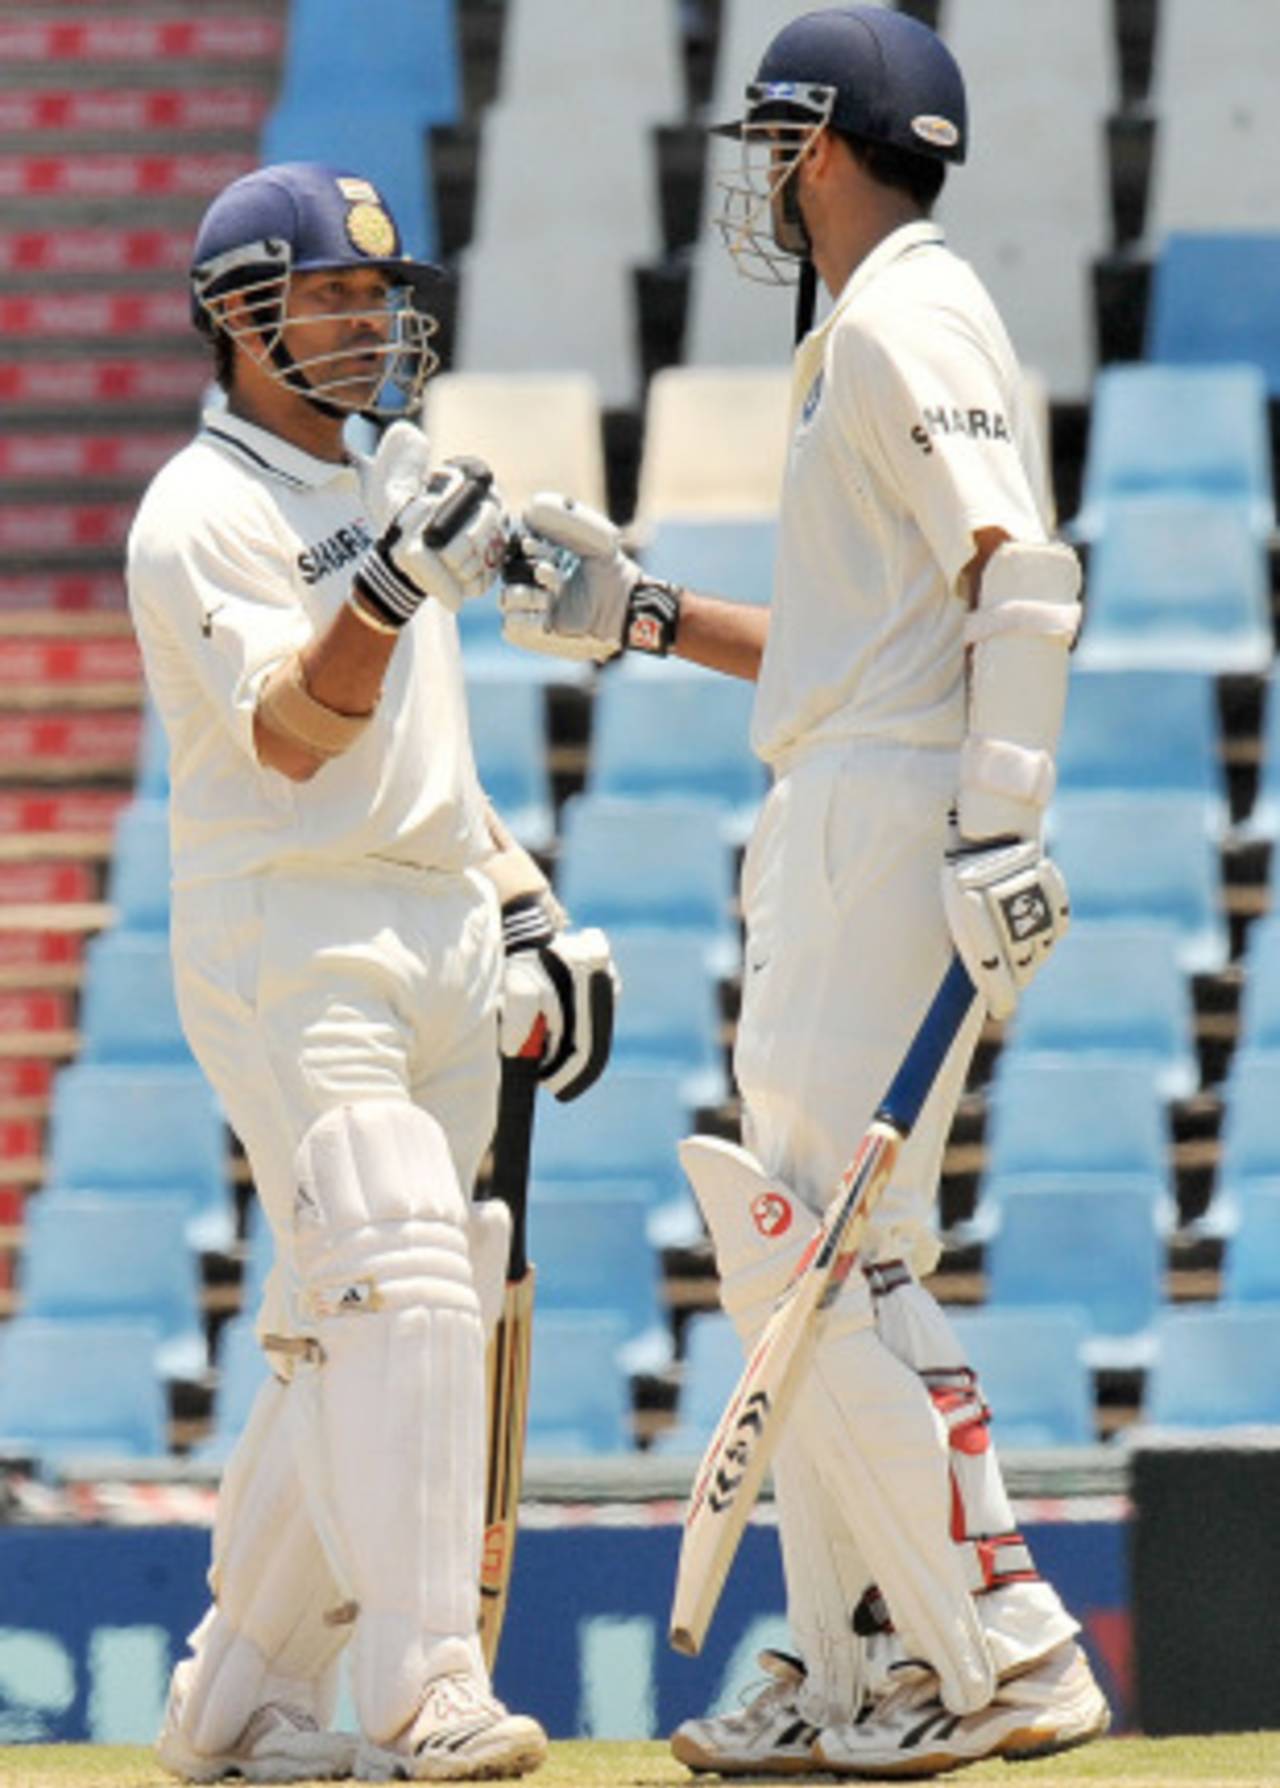 Sachin Tendulkar congratulates Rahul Dravid on his 12,000th Test run, South Africa v India, 1st Test, Centurion, 4th day, December 19, 2010